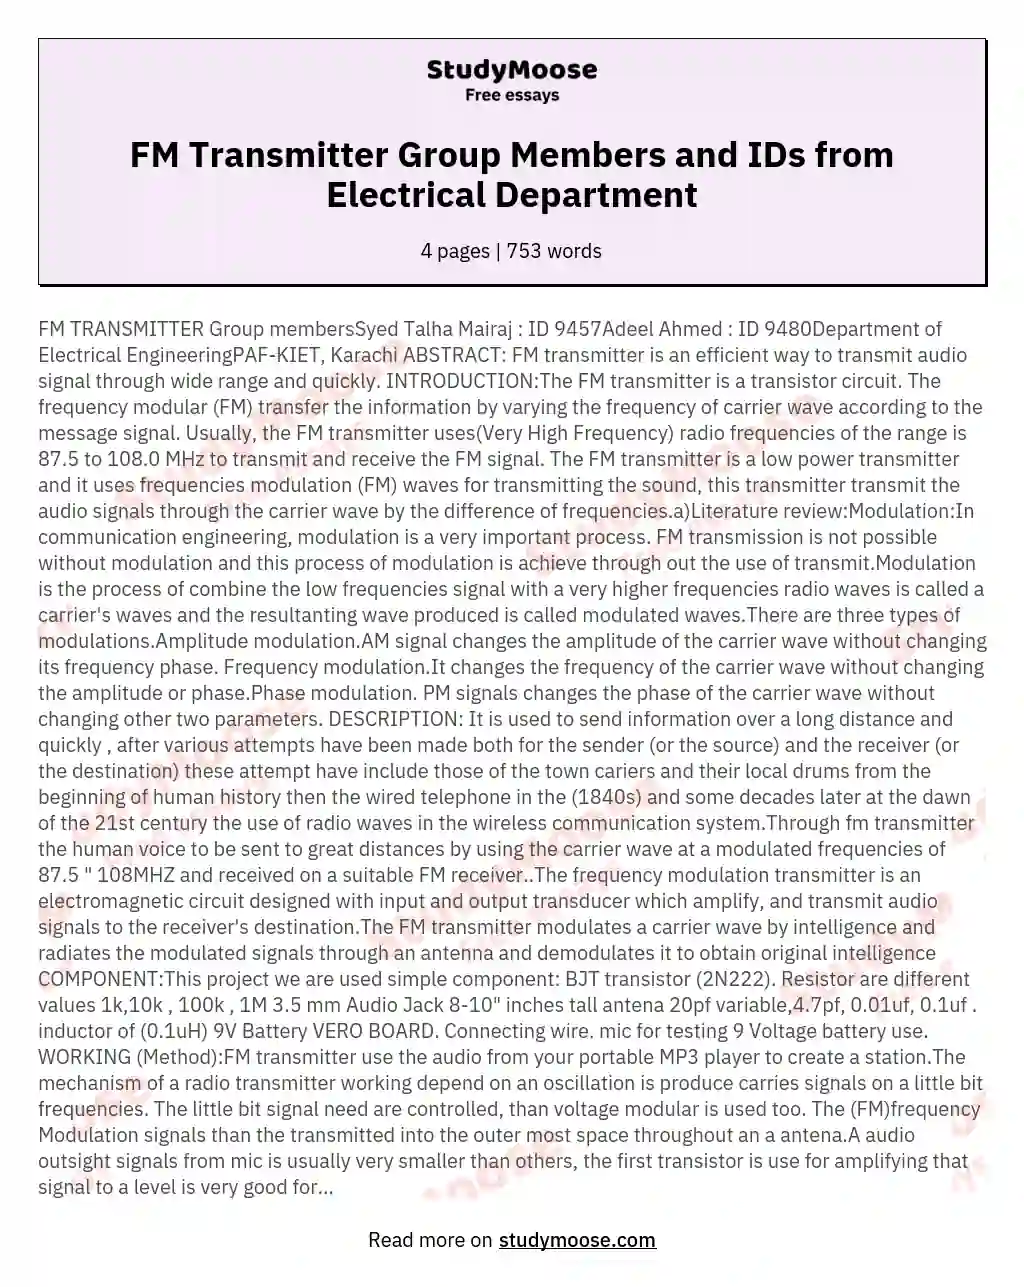 FM TRANSMITTER Group membersSyed Talha Mairaj ID 9457Adeel Ahmed ID 9480Department of Electrical